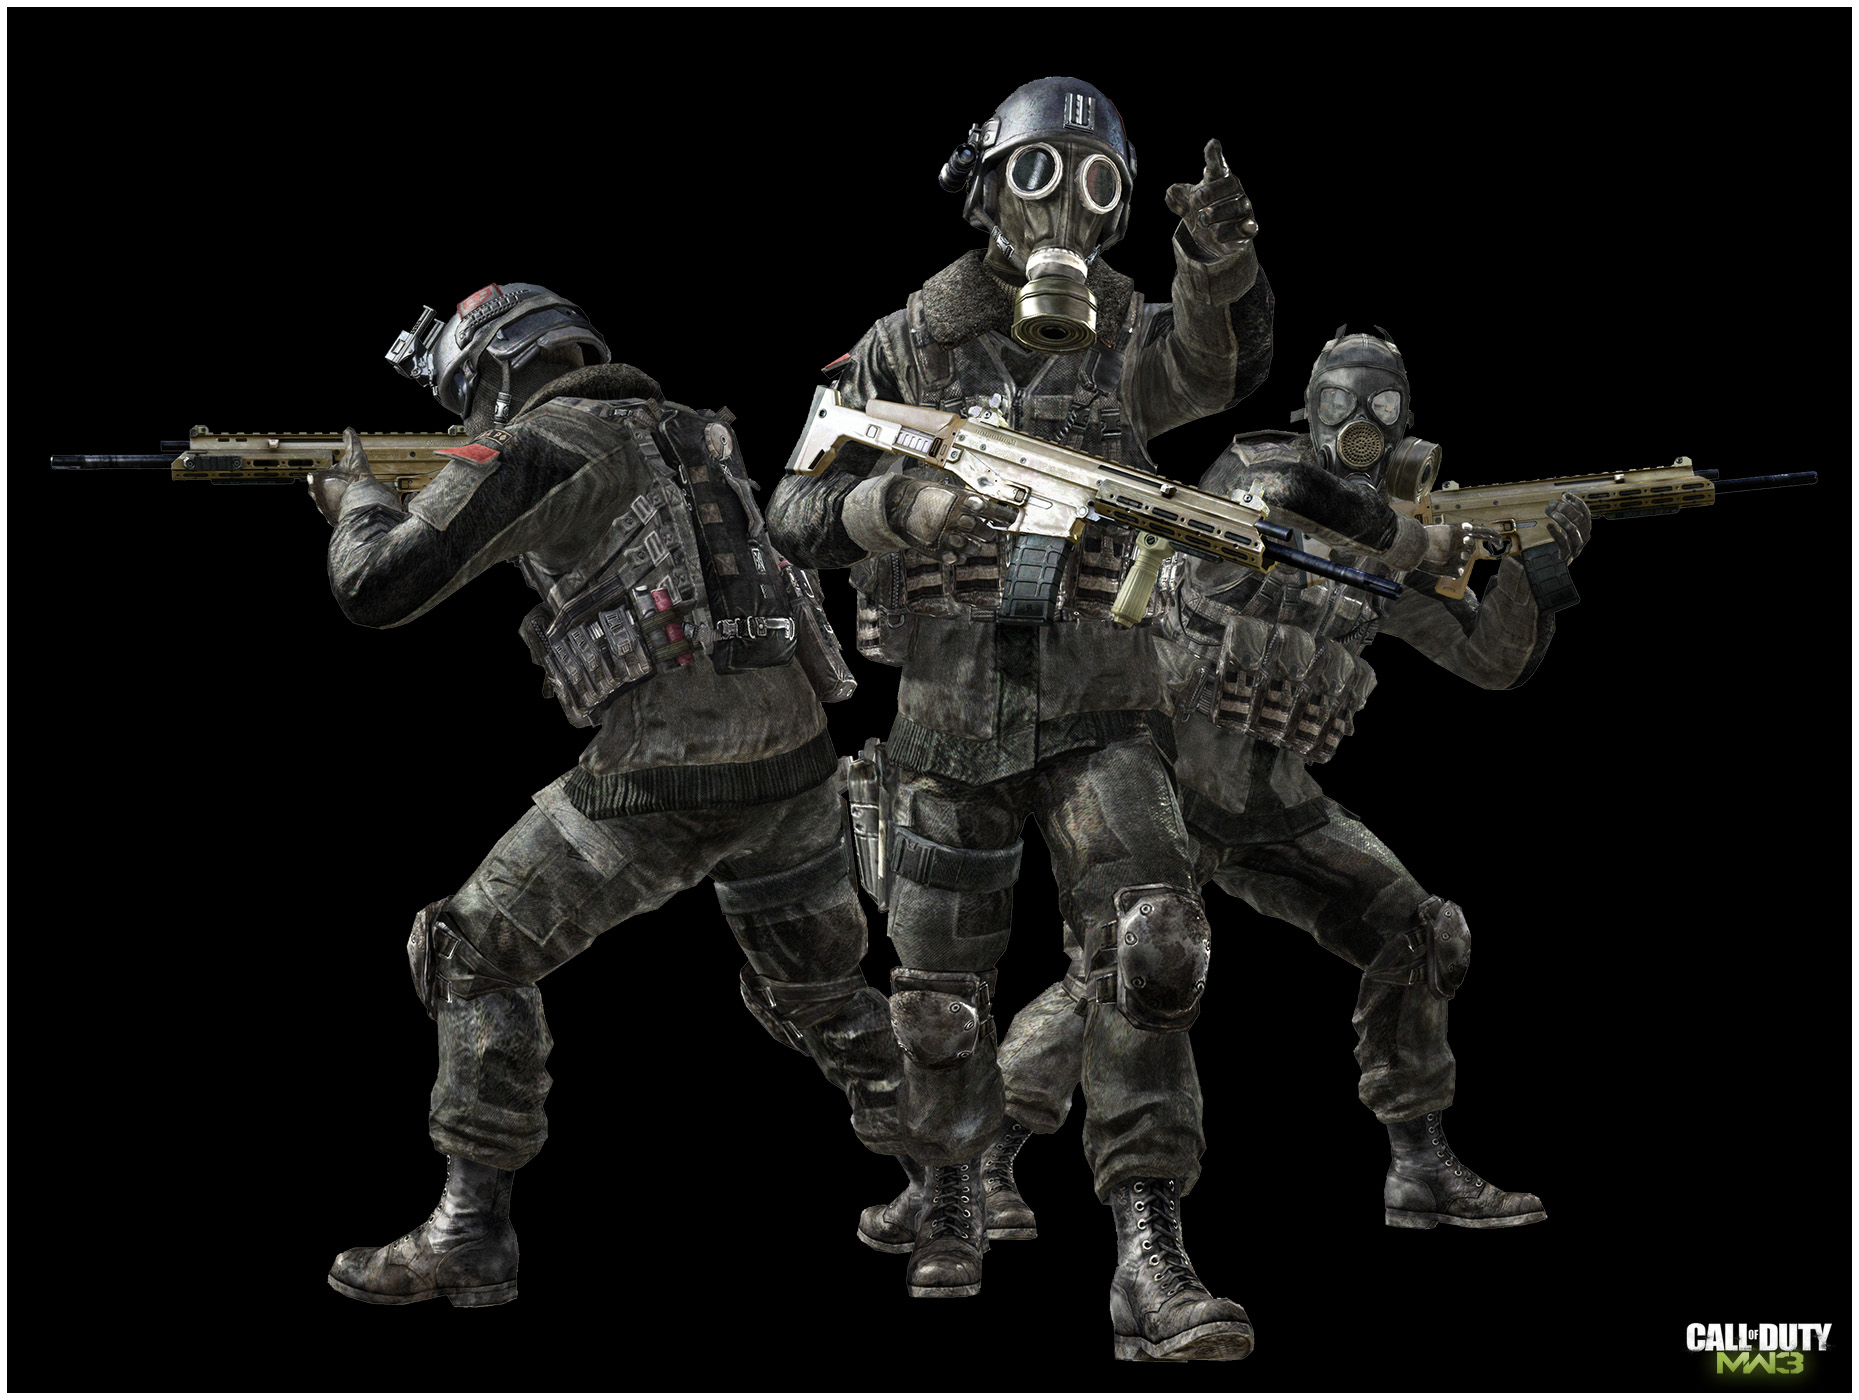 Call of duty modern warfare 2 3. Солдаты Cod mw2. Солдаты из Call of Duty Modern Warfare 2. Cod mw3 Russian Commando. Call of Duty Modern Warfare 2 солдаты Макарова.